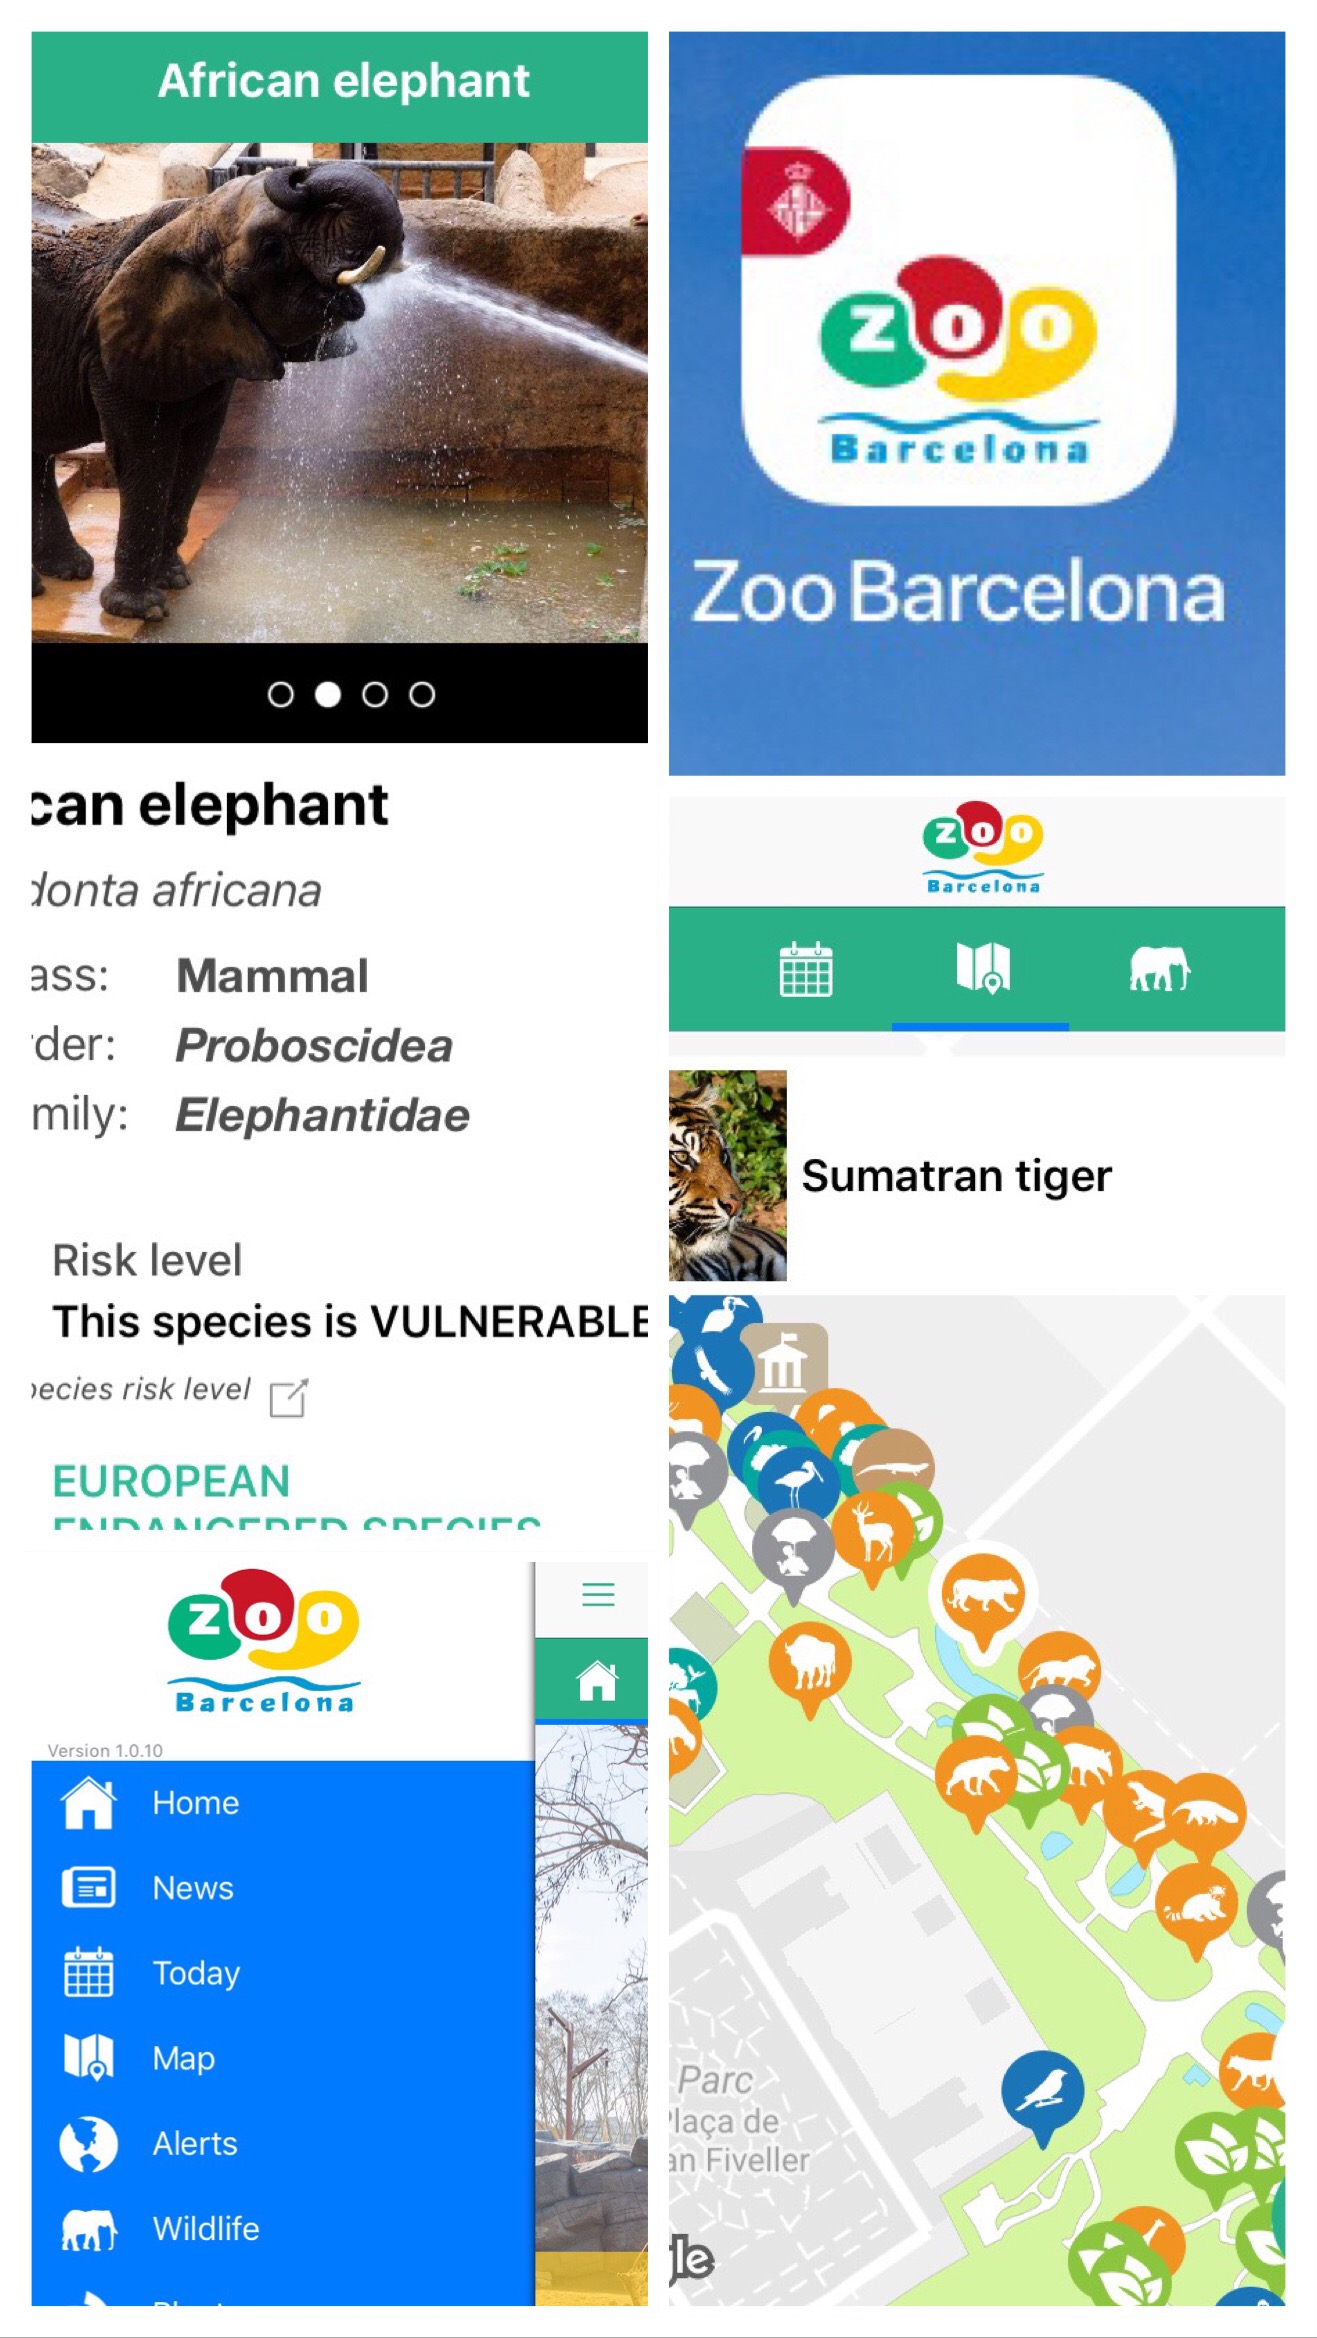 https://itunes.apple.com/es/app/zoo-de-barcelona/id1189550166?mt=8